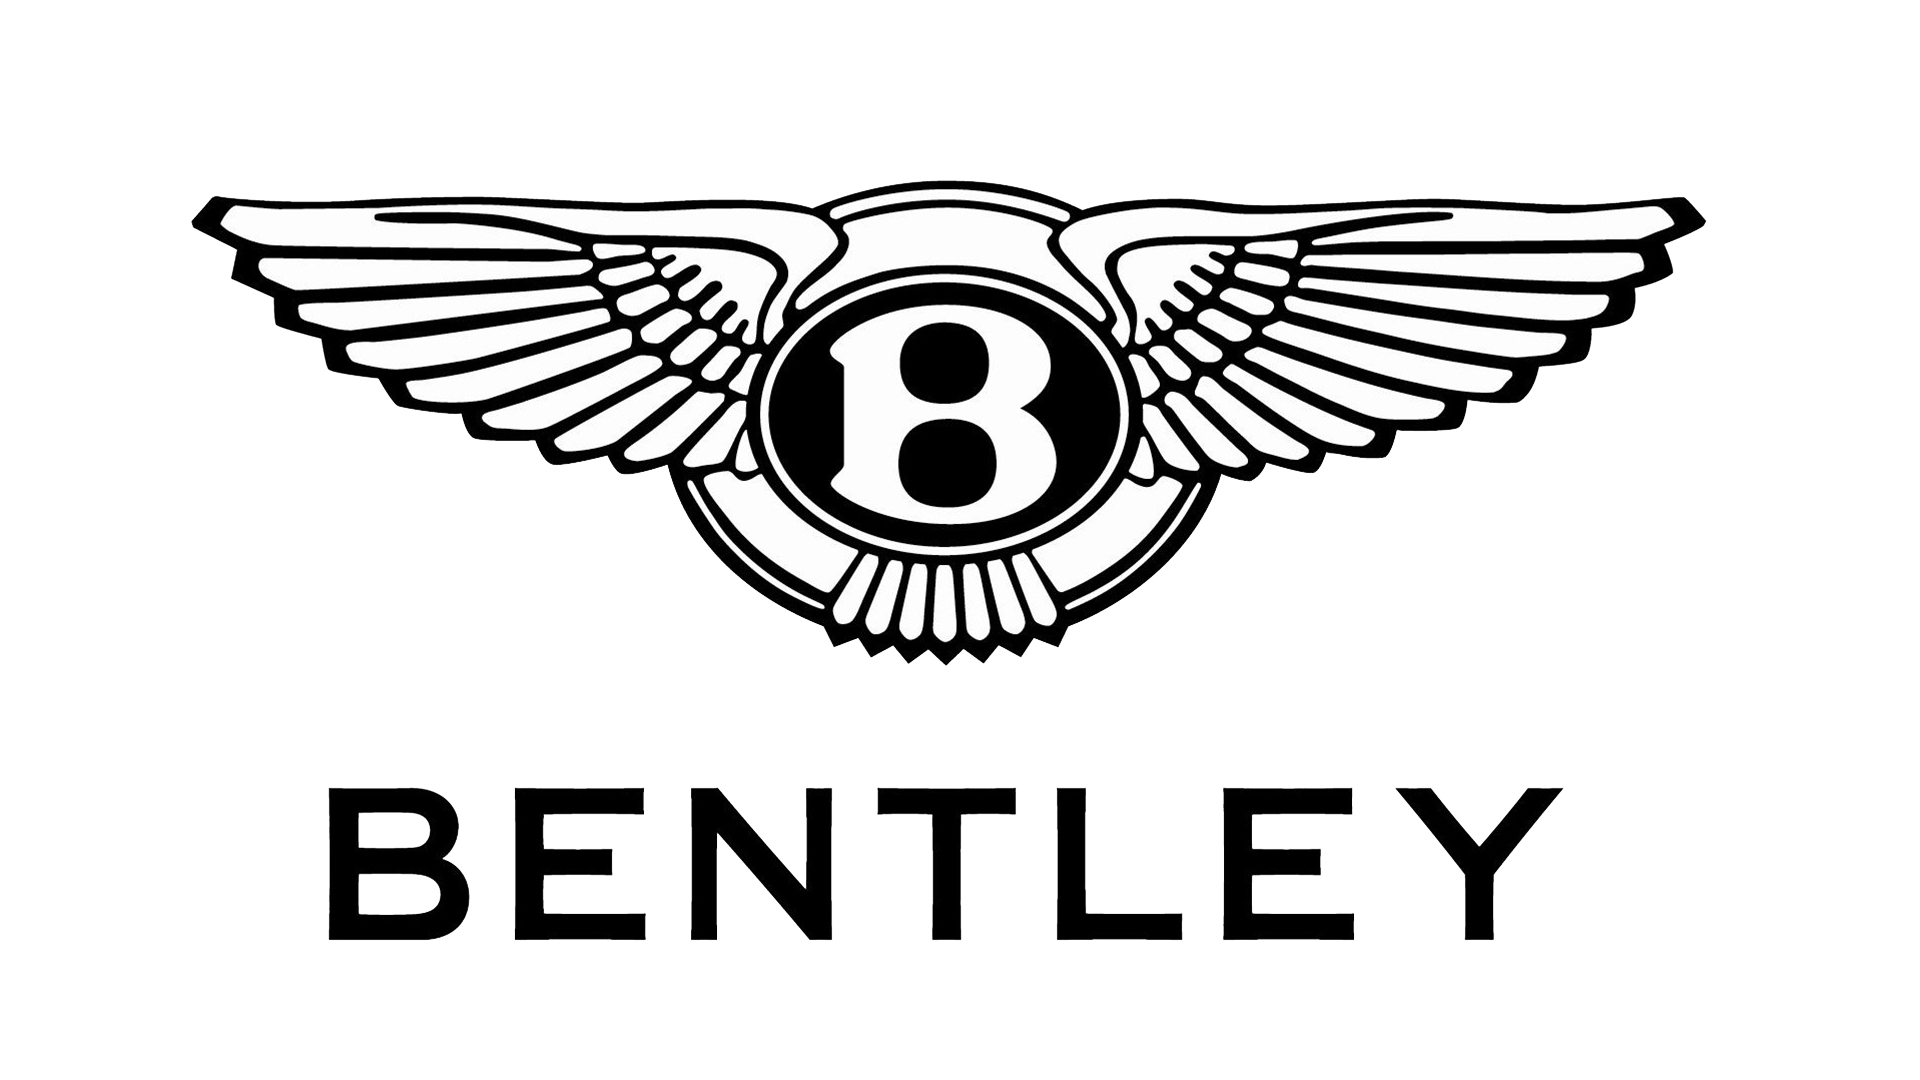 Bentley-symbol-black-1920x1080.png